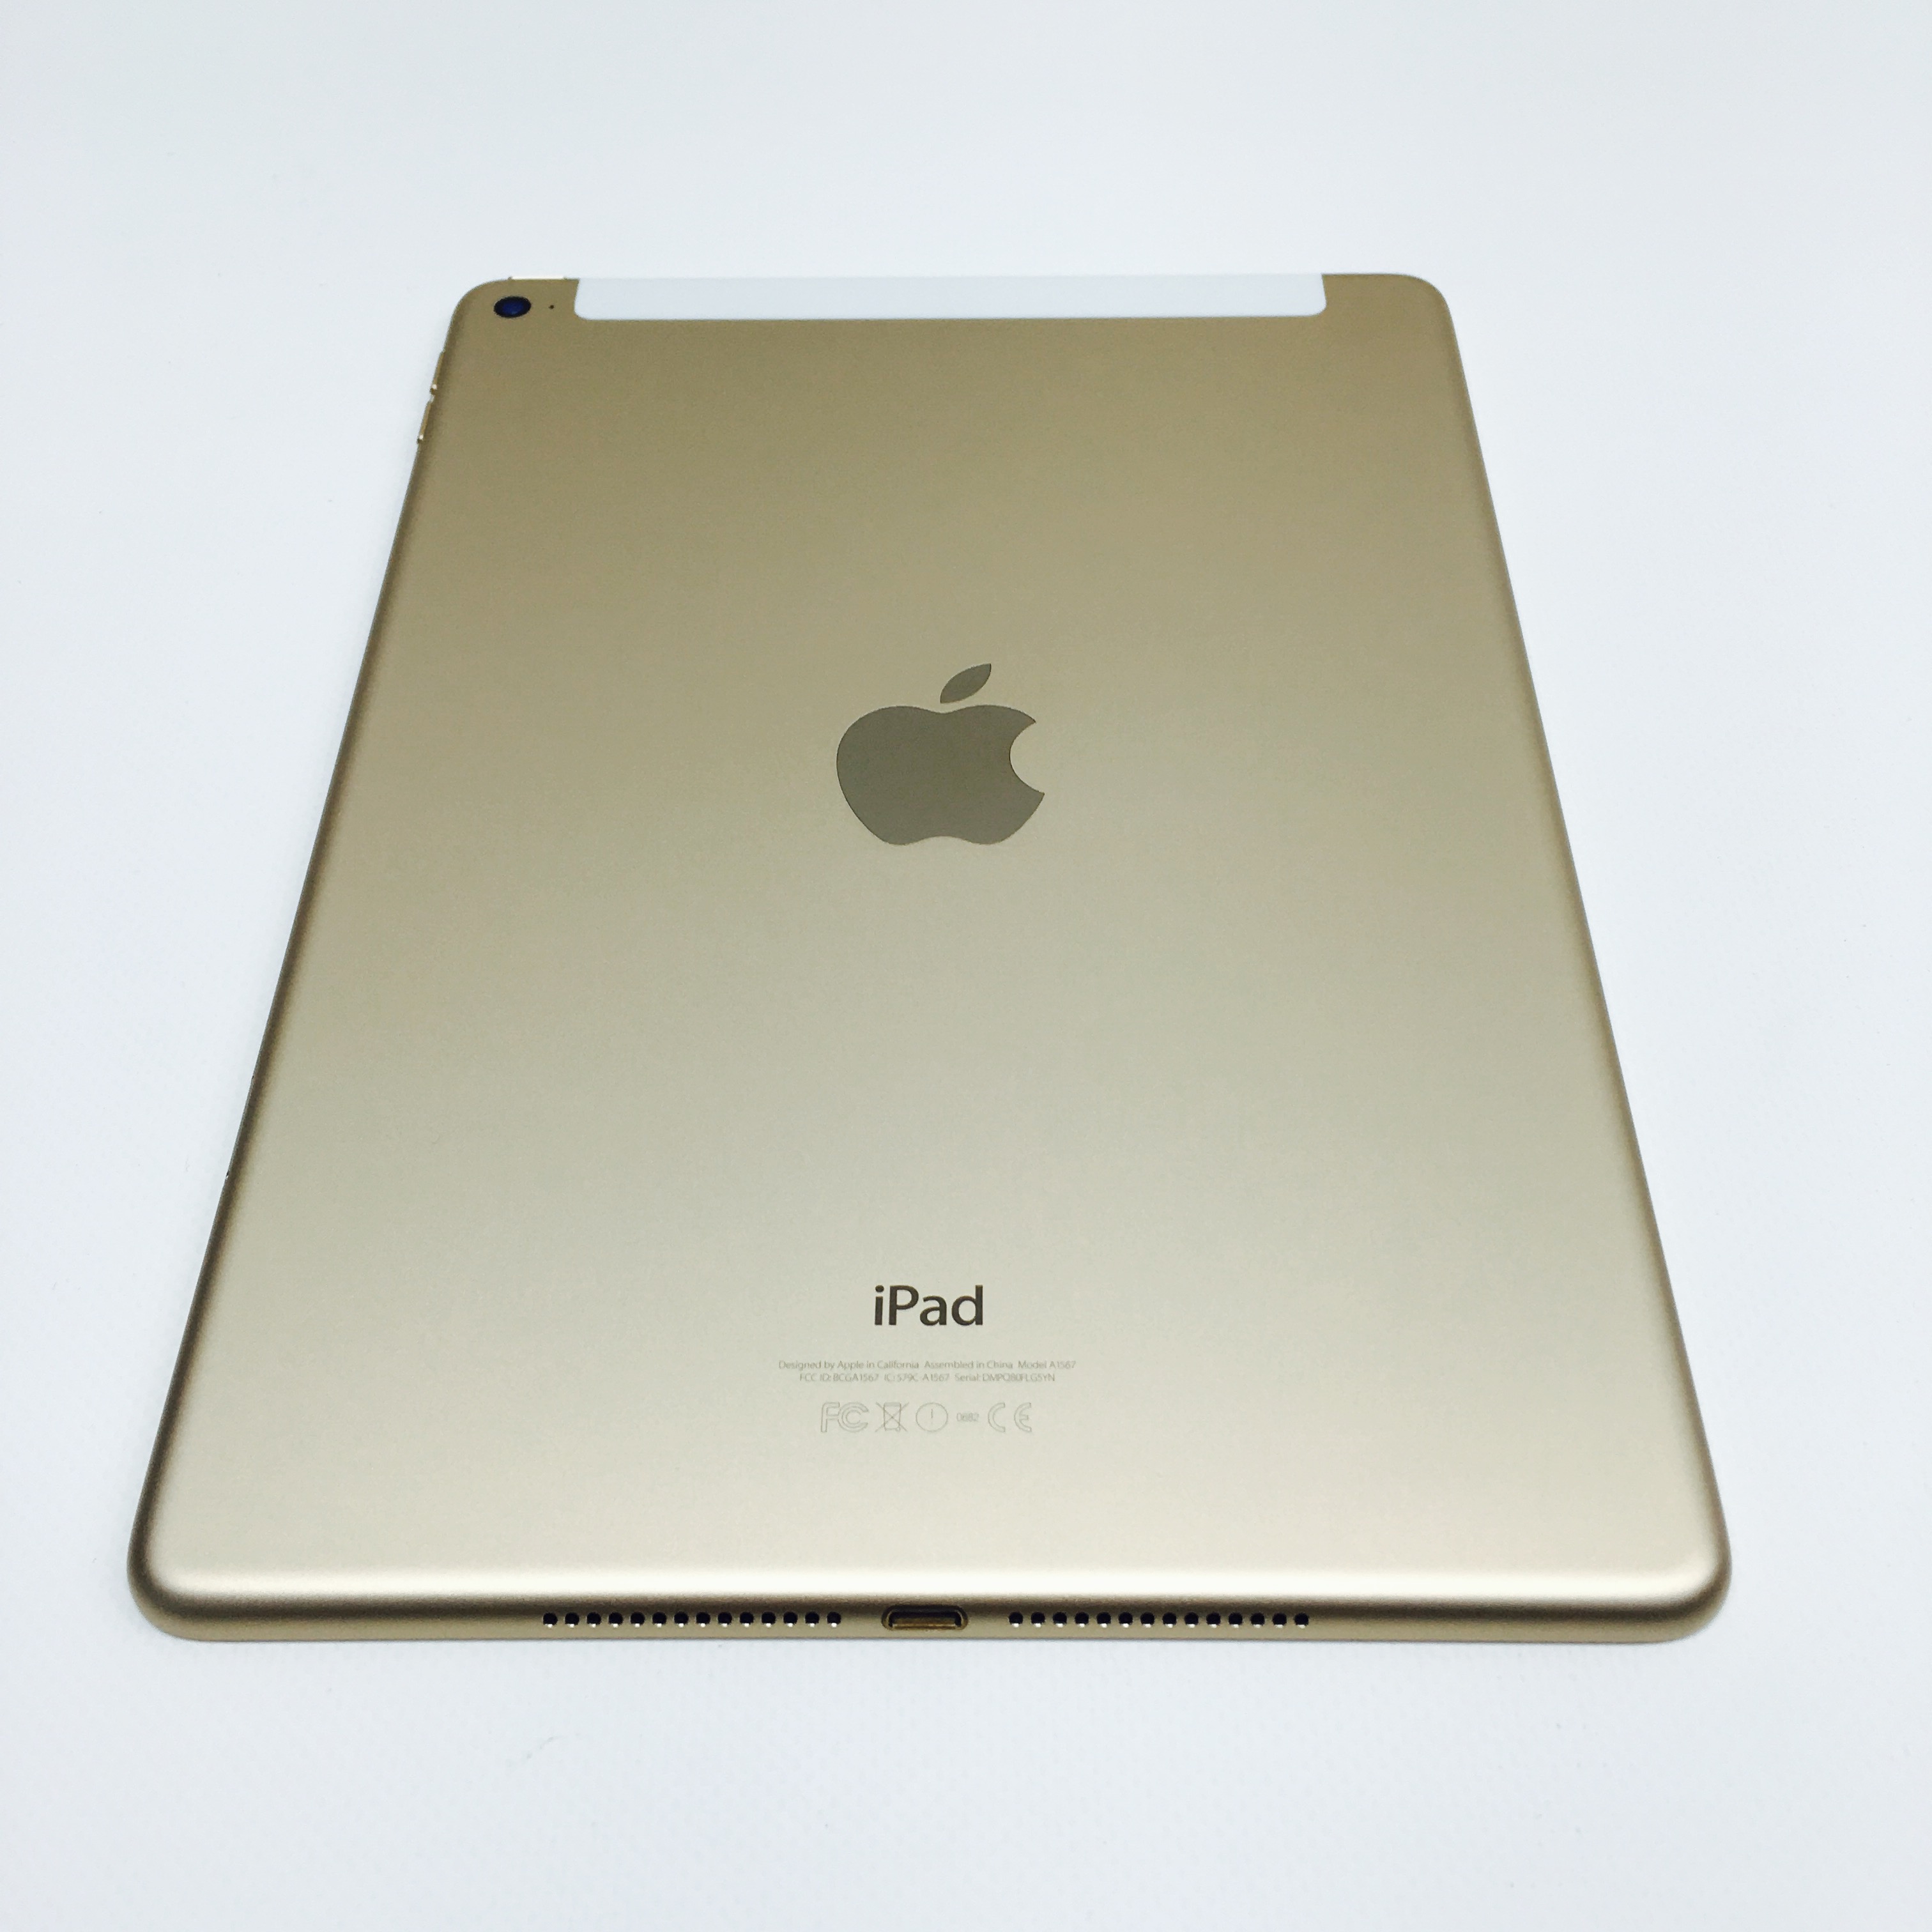 Fully Refurbish iPad Air 2 Gold 64GB WiFi, Cellular 64GB / GOLD ...